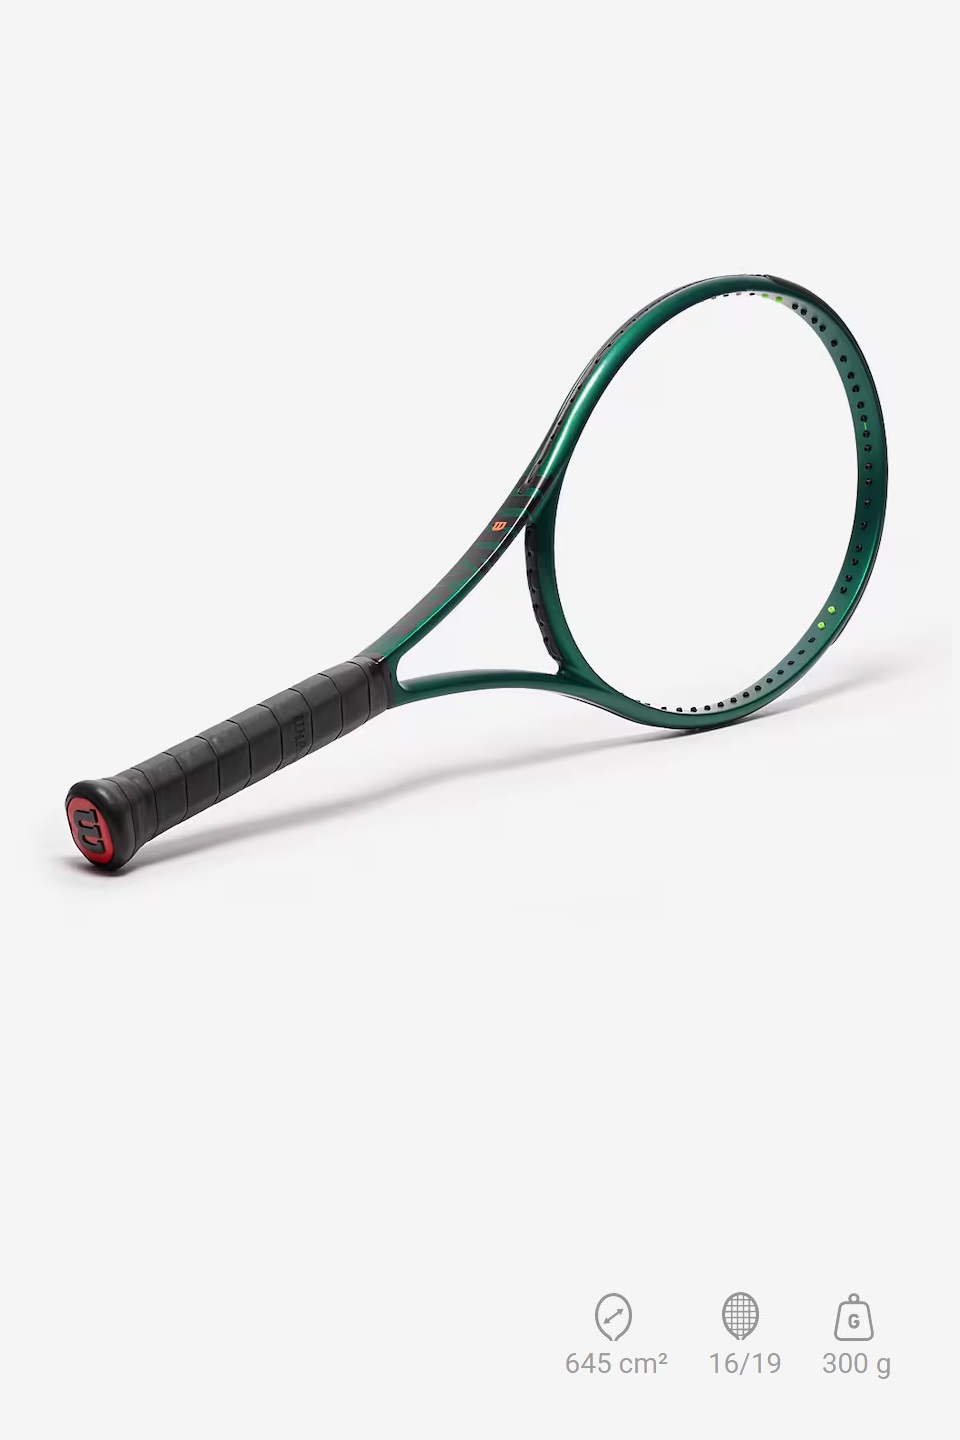 WİLSON - Wilson Blade 100 v9 Tenis Raketi 300 gr